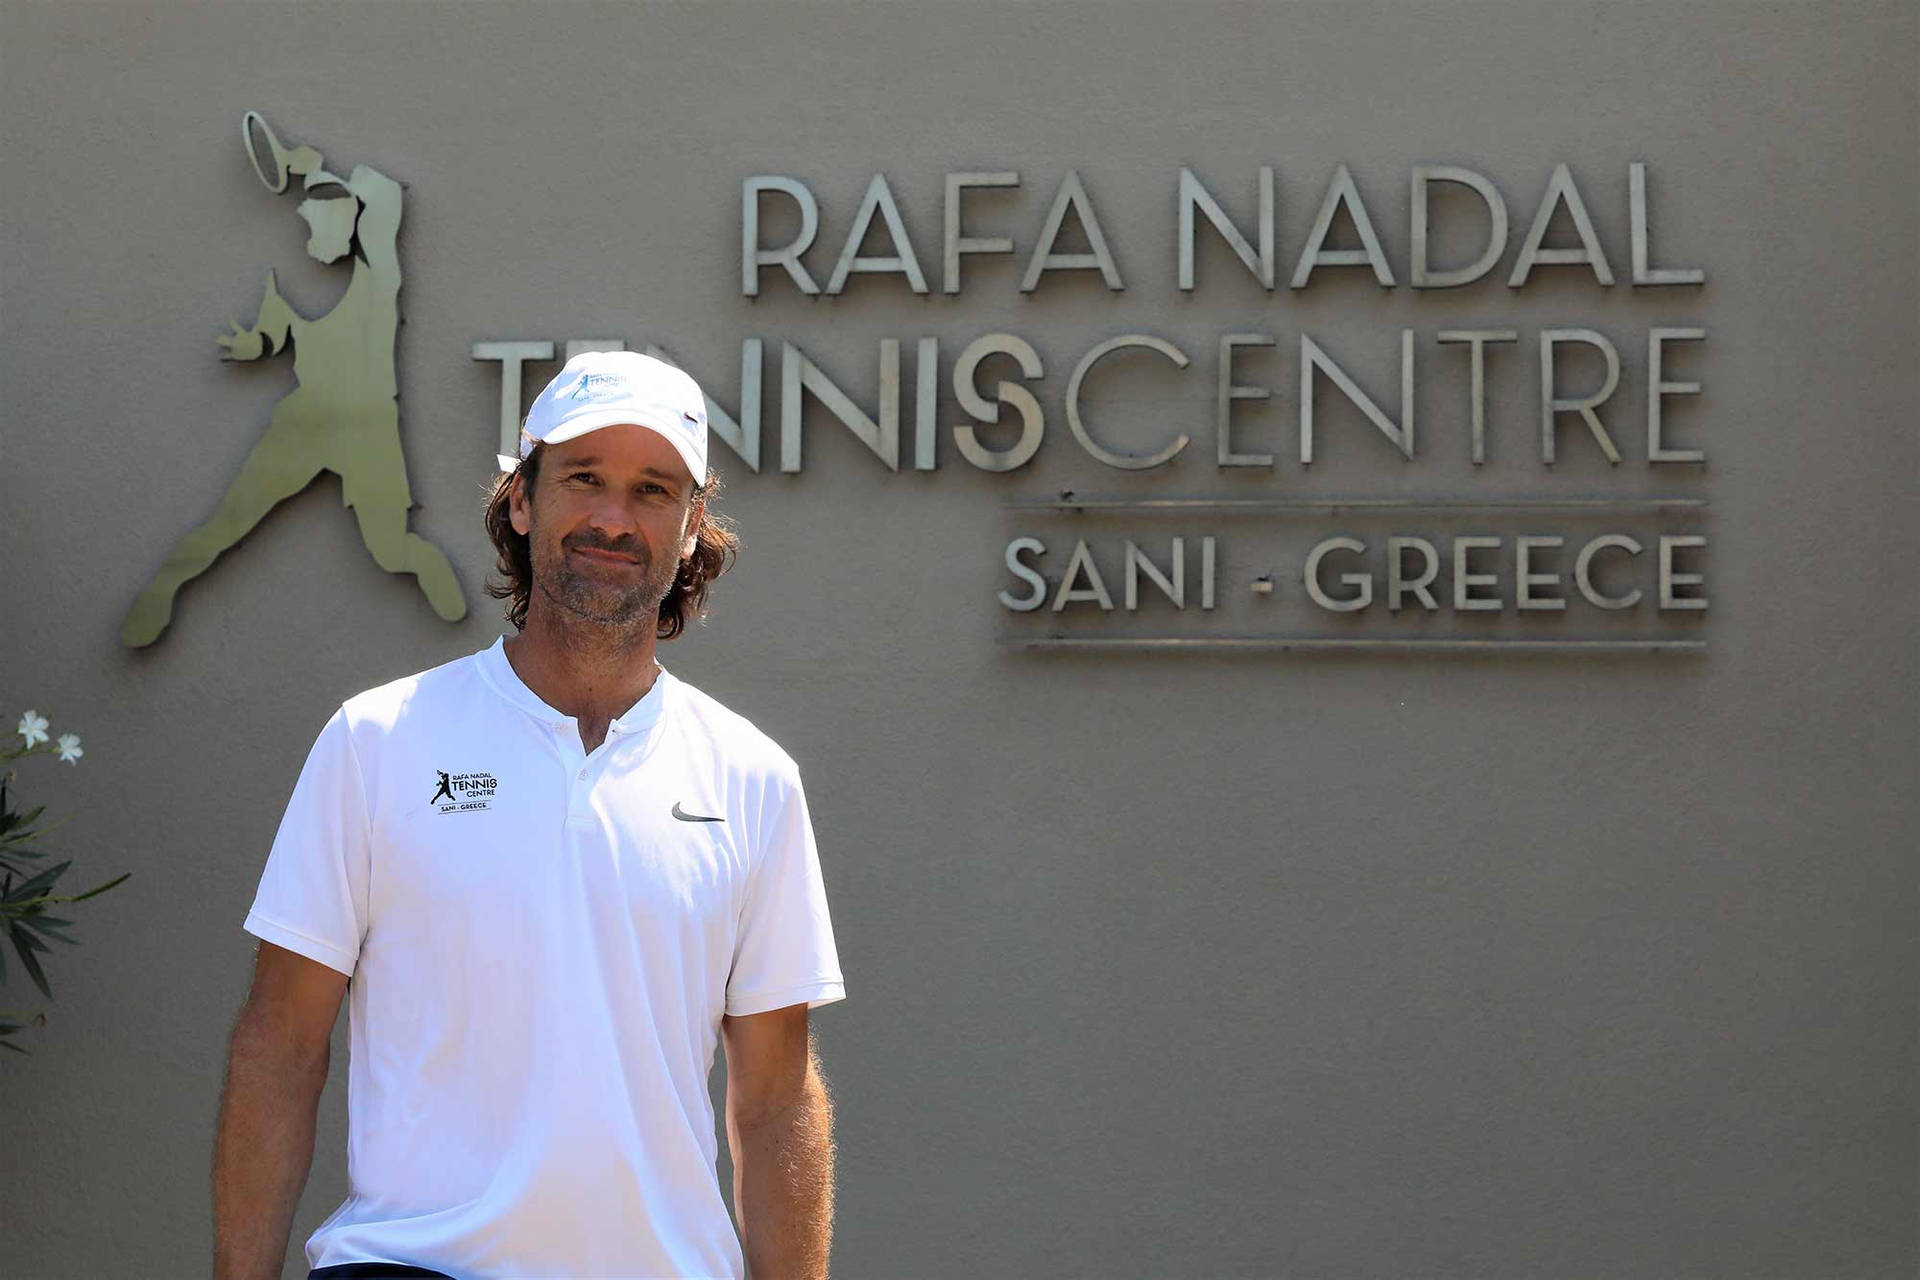 Carlos Moya Rafa Nadal Tennis Centre Wallpaper